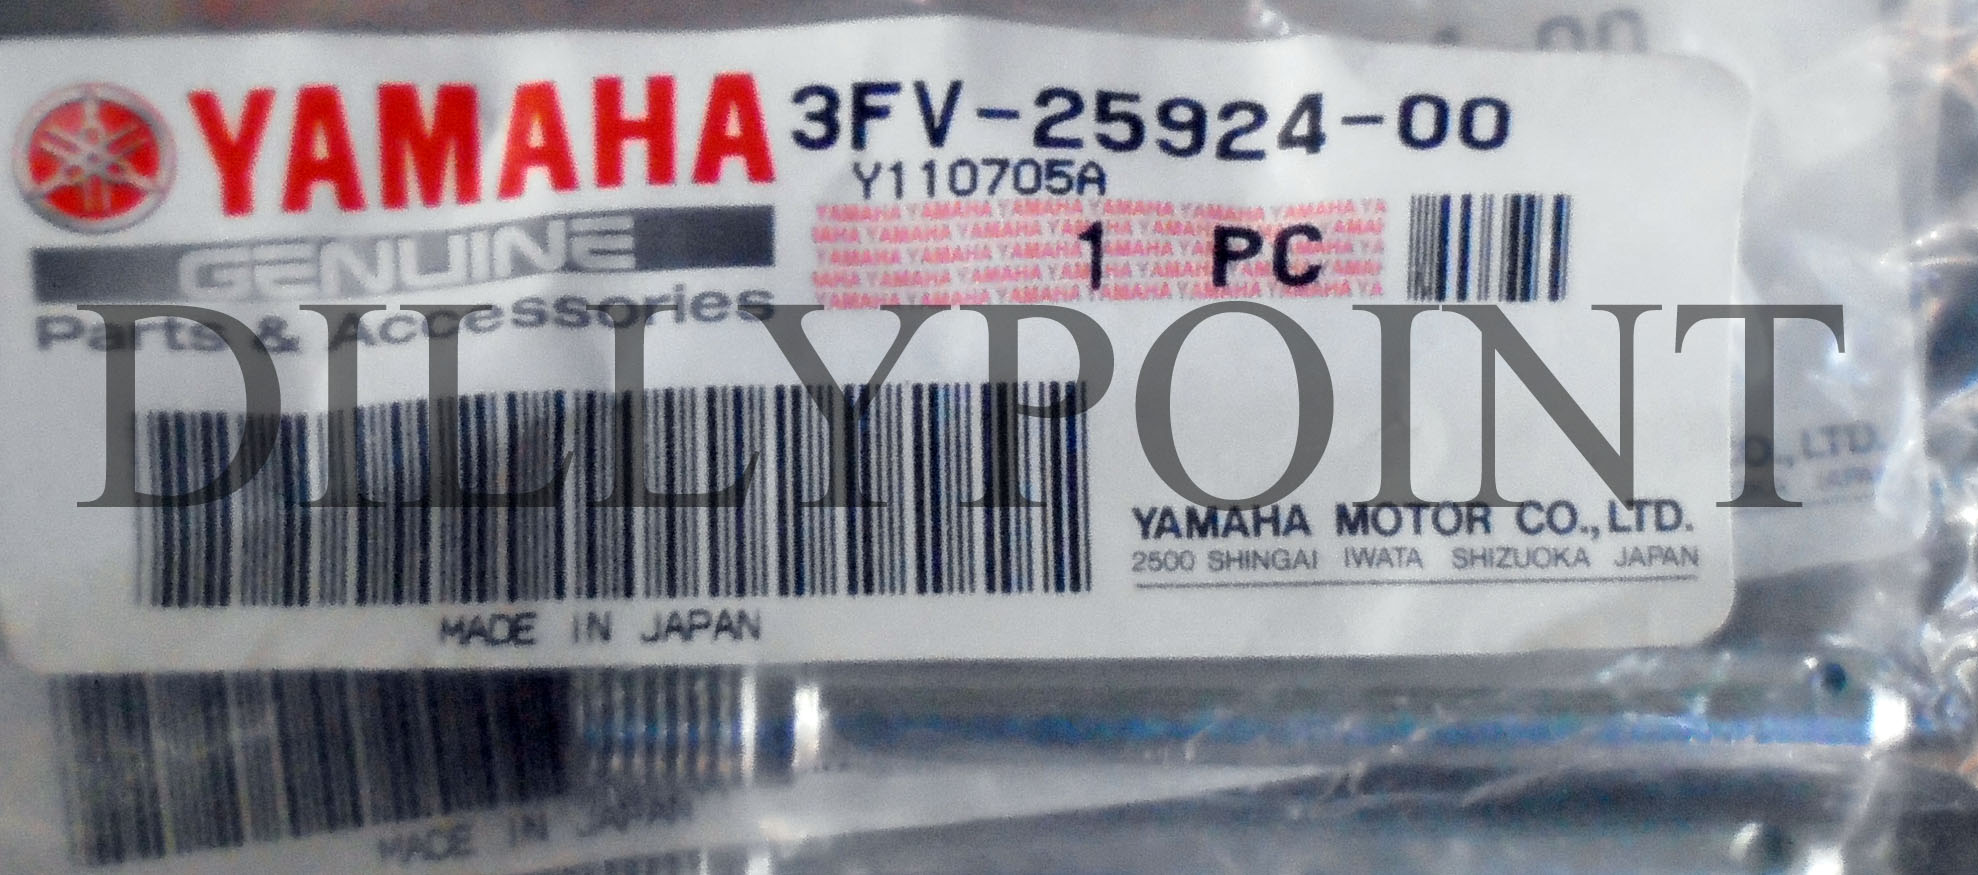 Pin retinere placute frana Yamaha XTZ 750